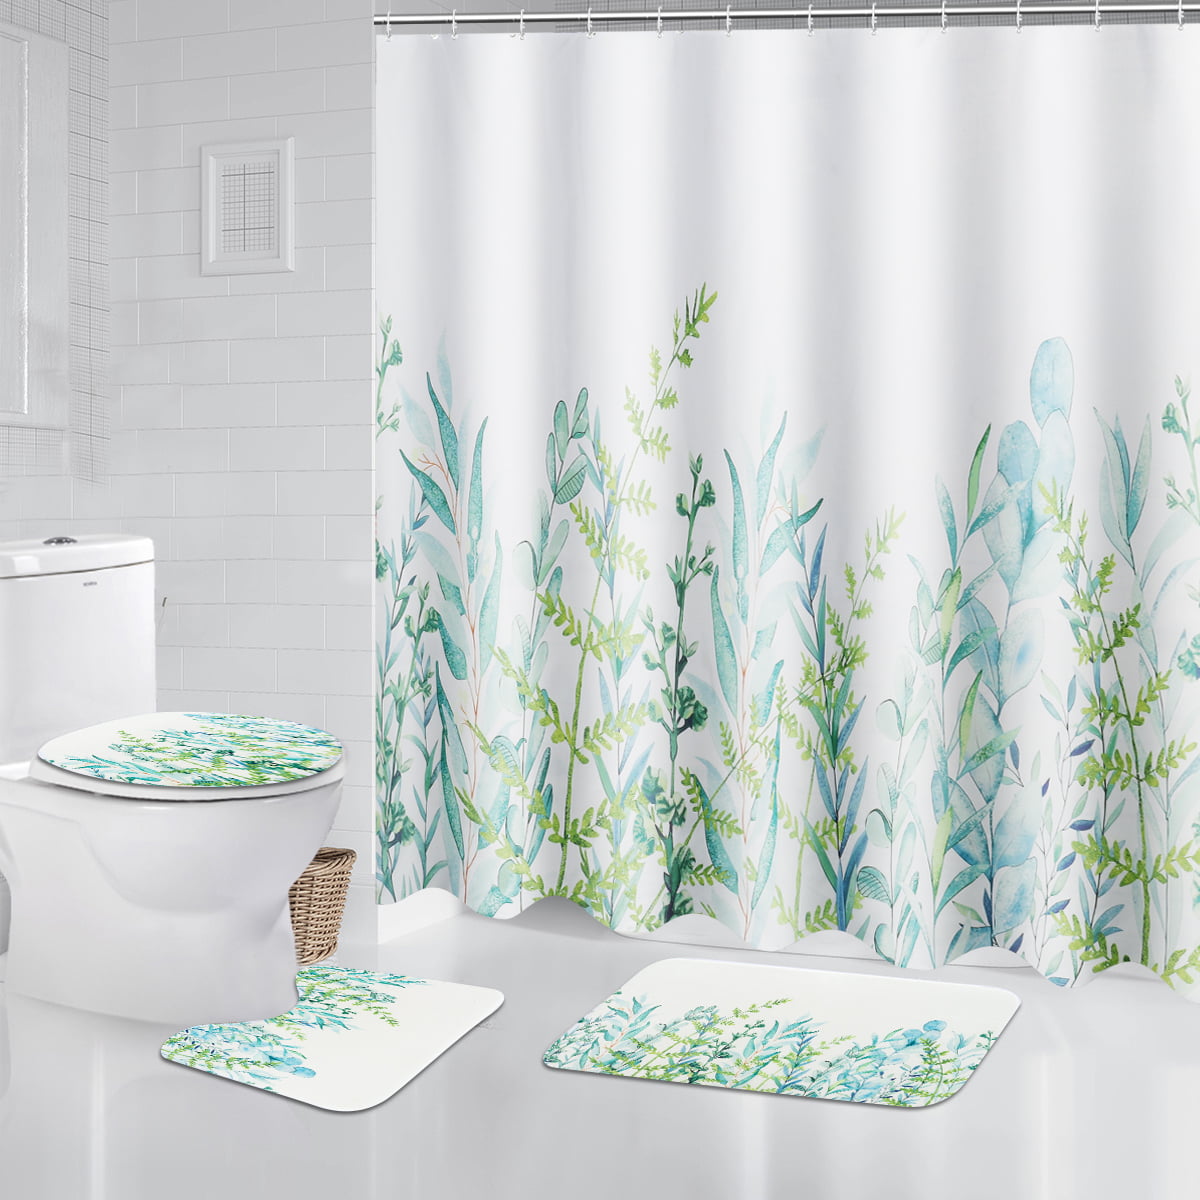 4Pcs Shower Curtain Bathroom Anti-slip Non-Slip Carpet Rug Toilet Cover Mat 